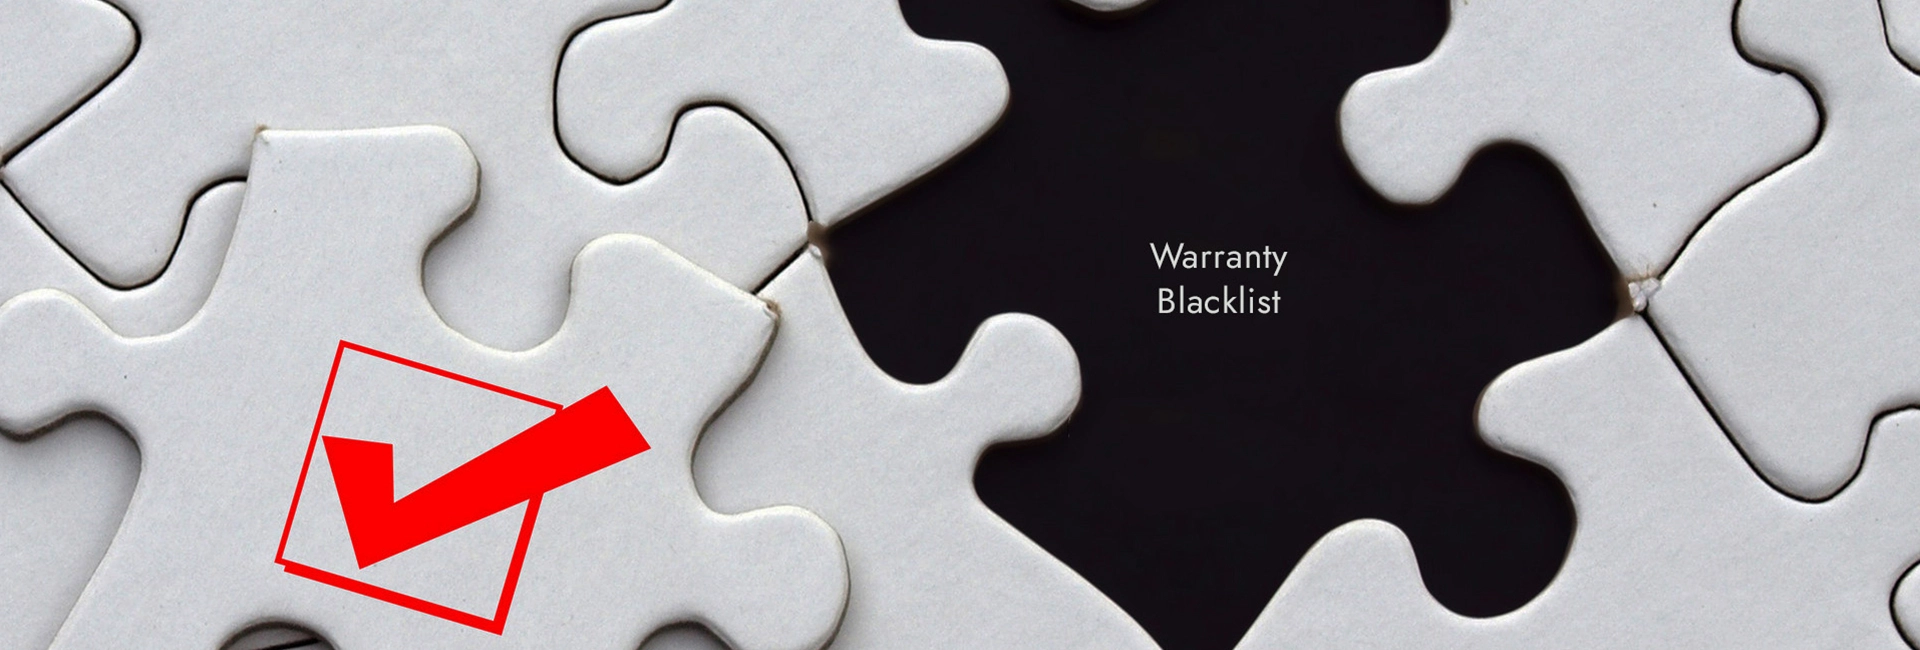 Warranty Blacklist